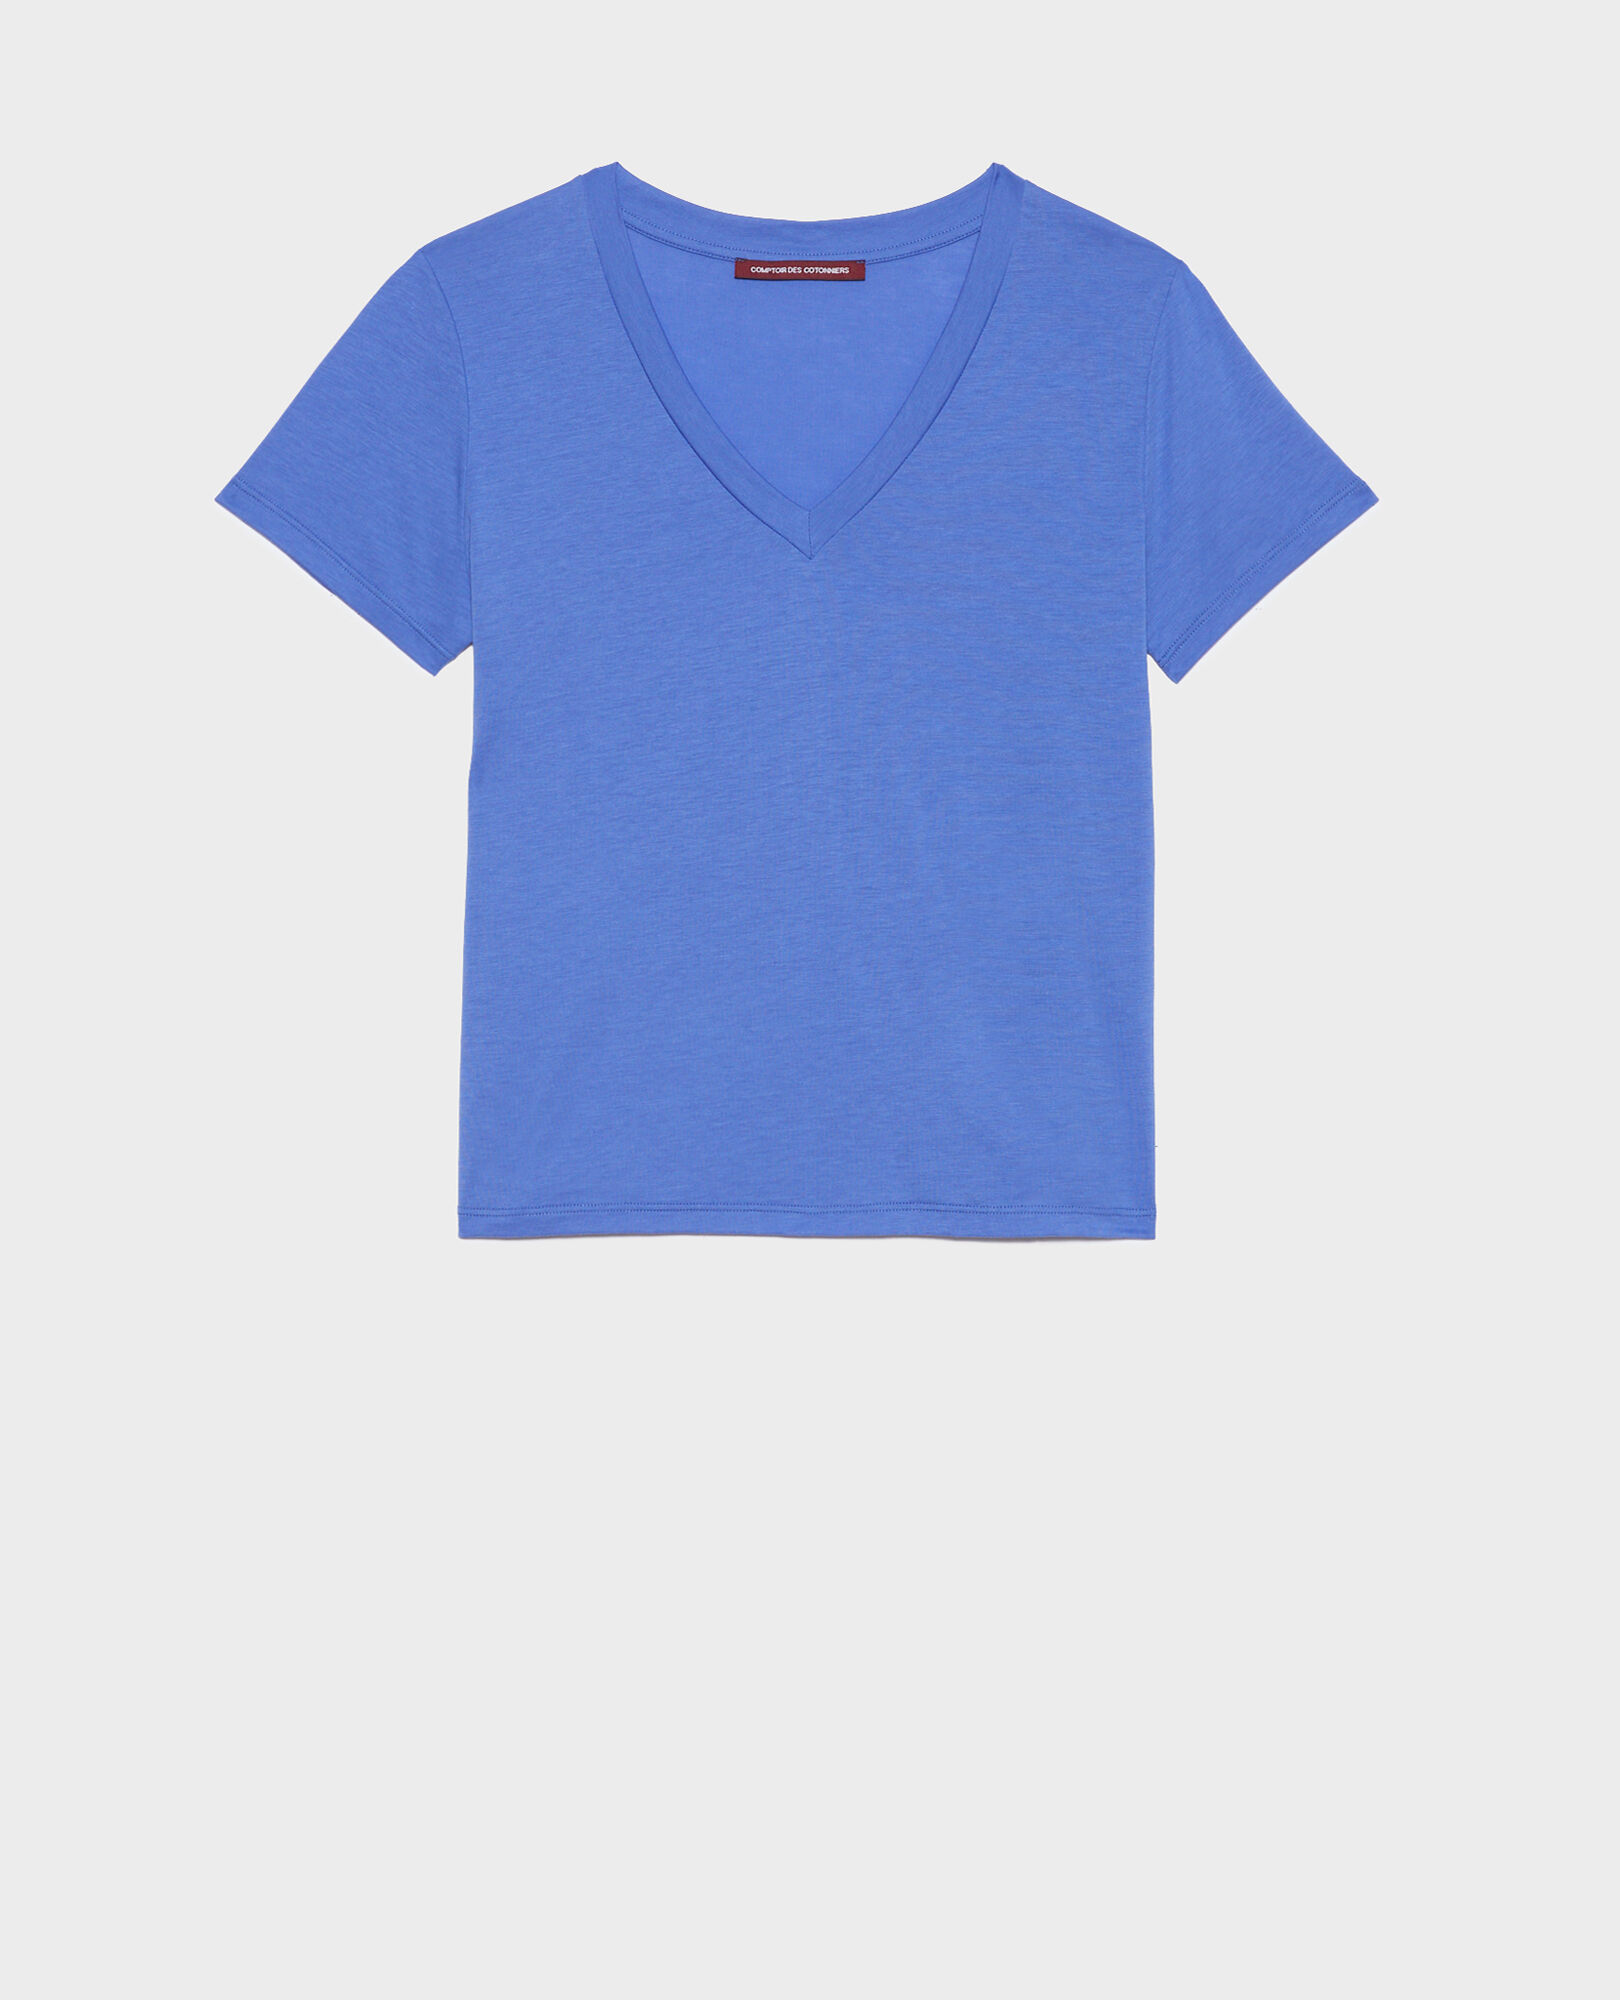 LÉA - Camiseta fluida con cuello de pico 62 blue Paberne